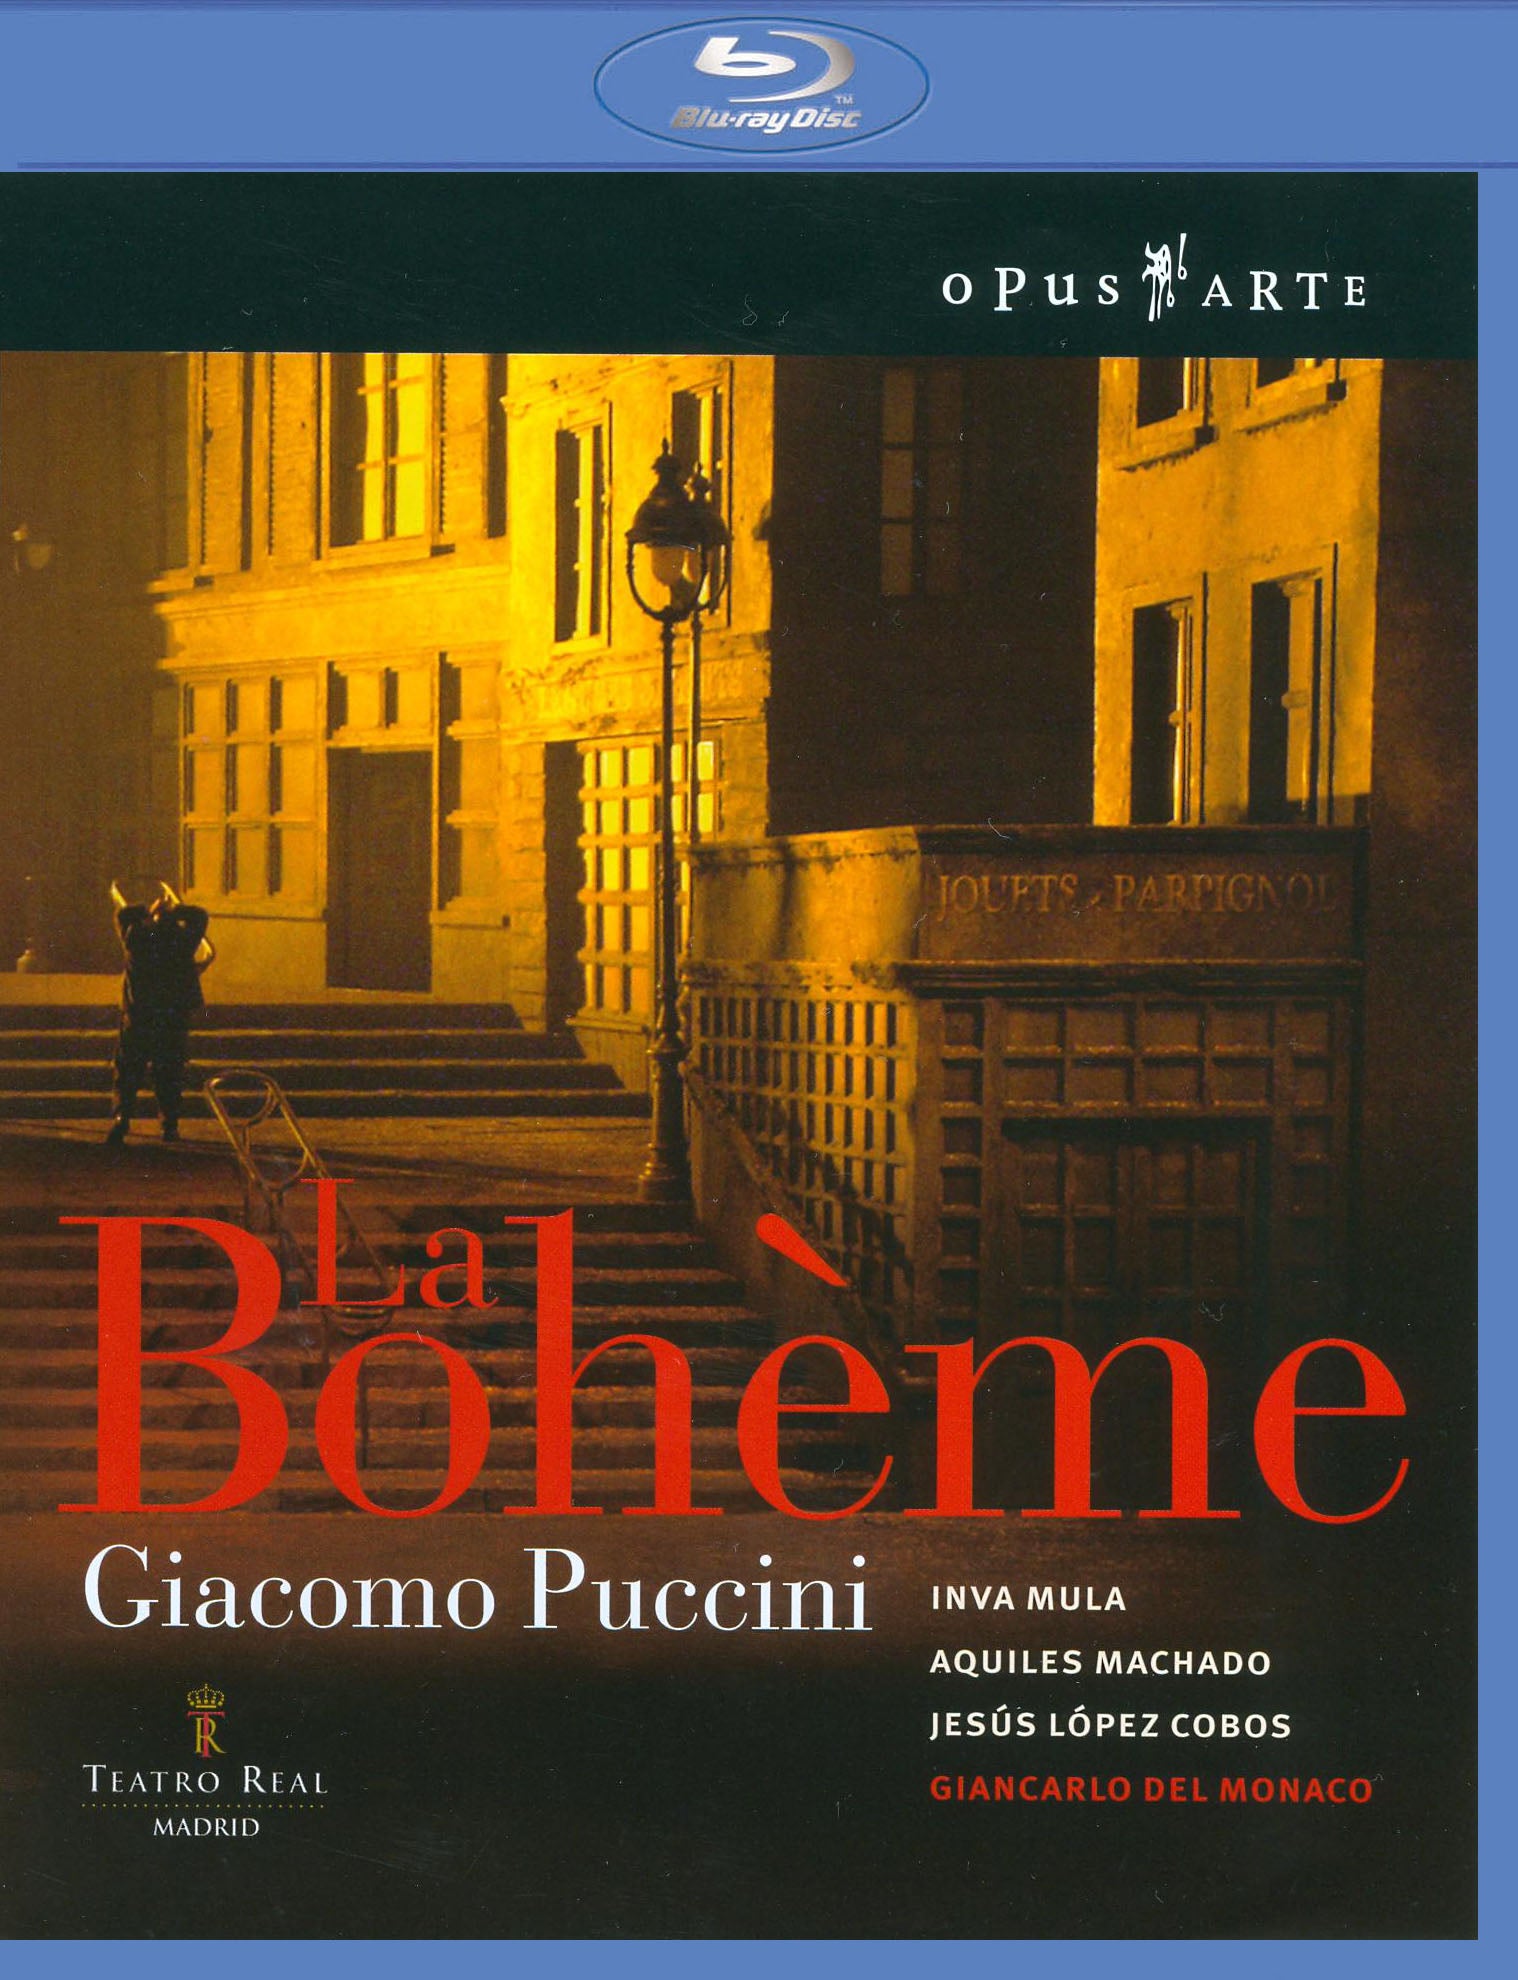 Giacomo Puccini - La Boheme cover art